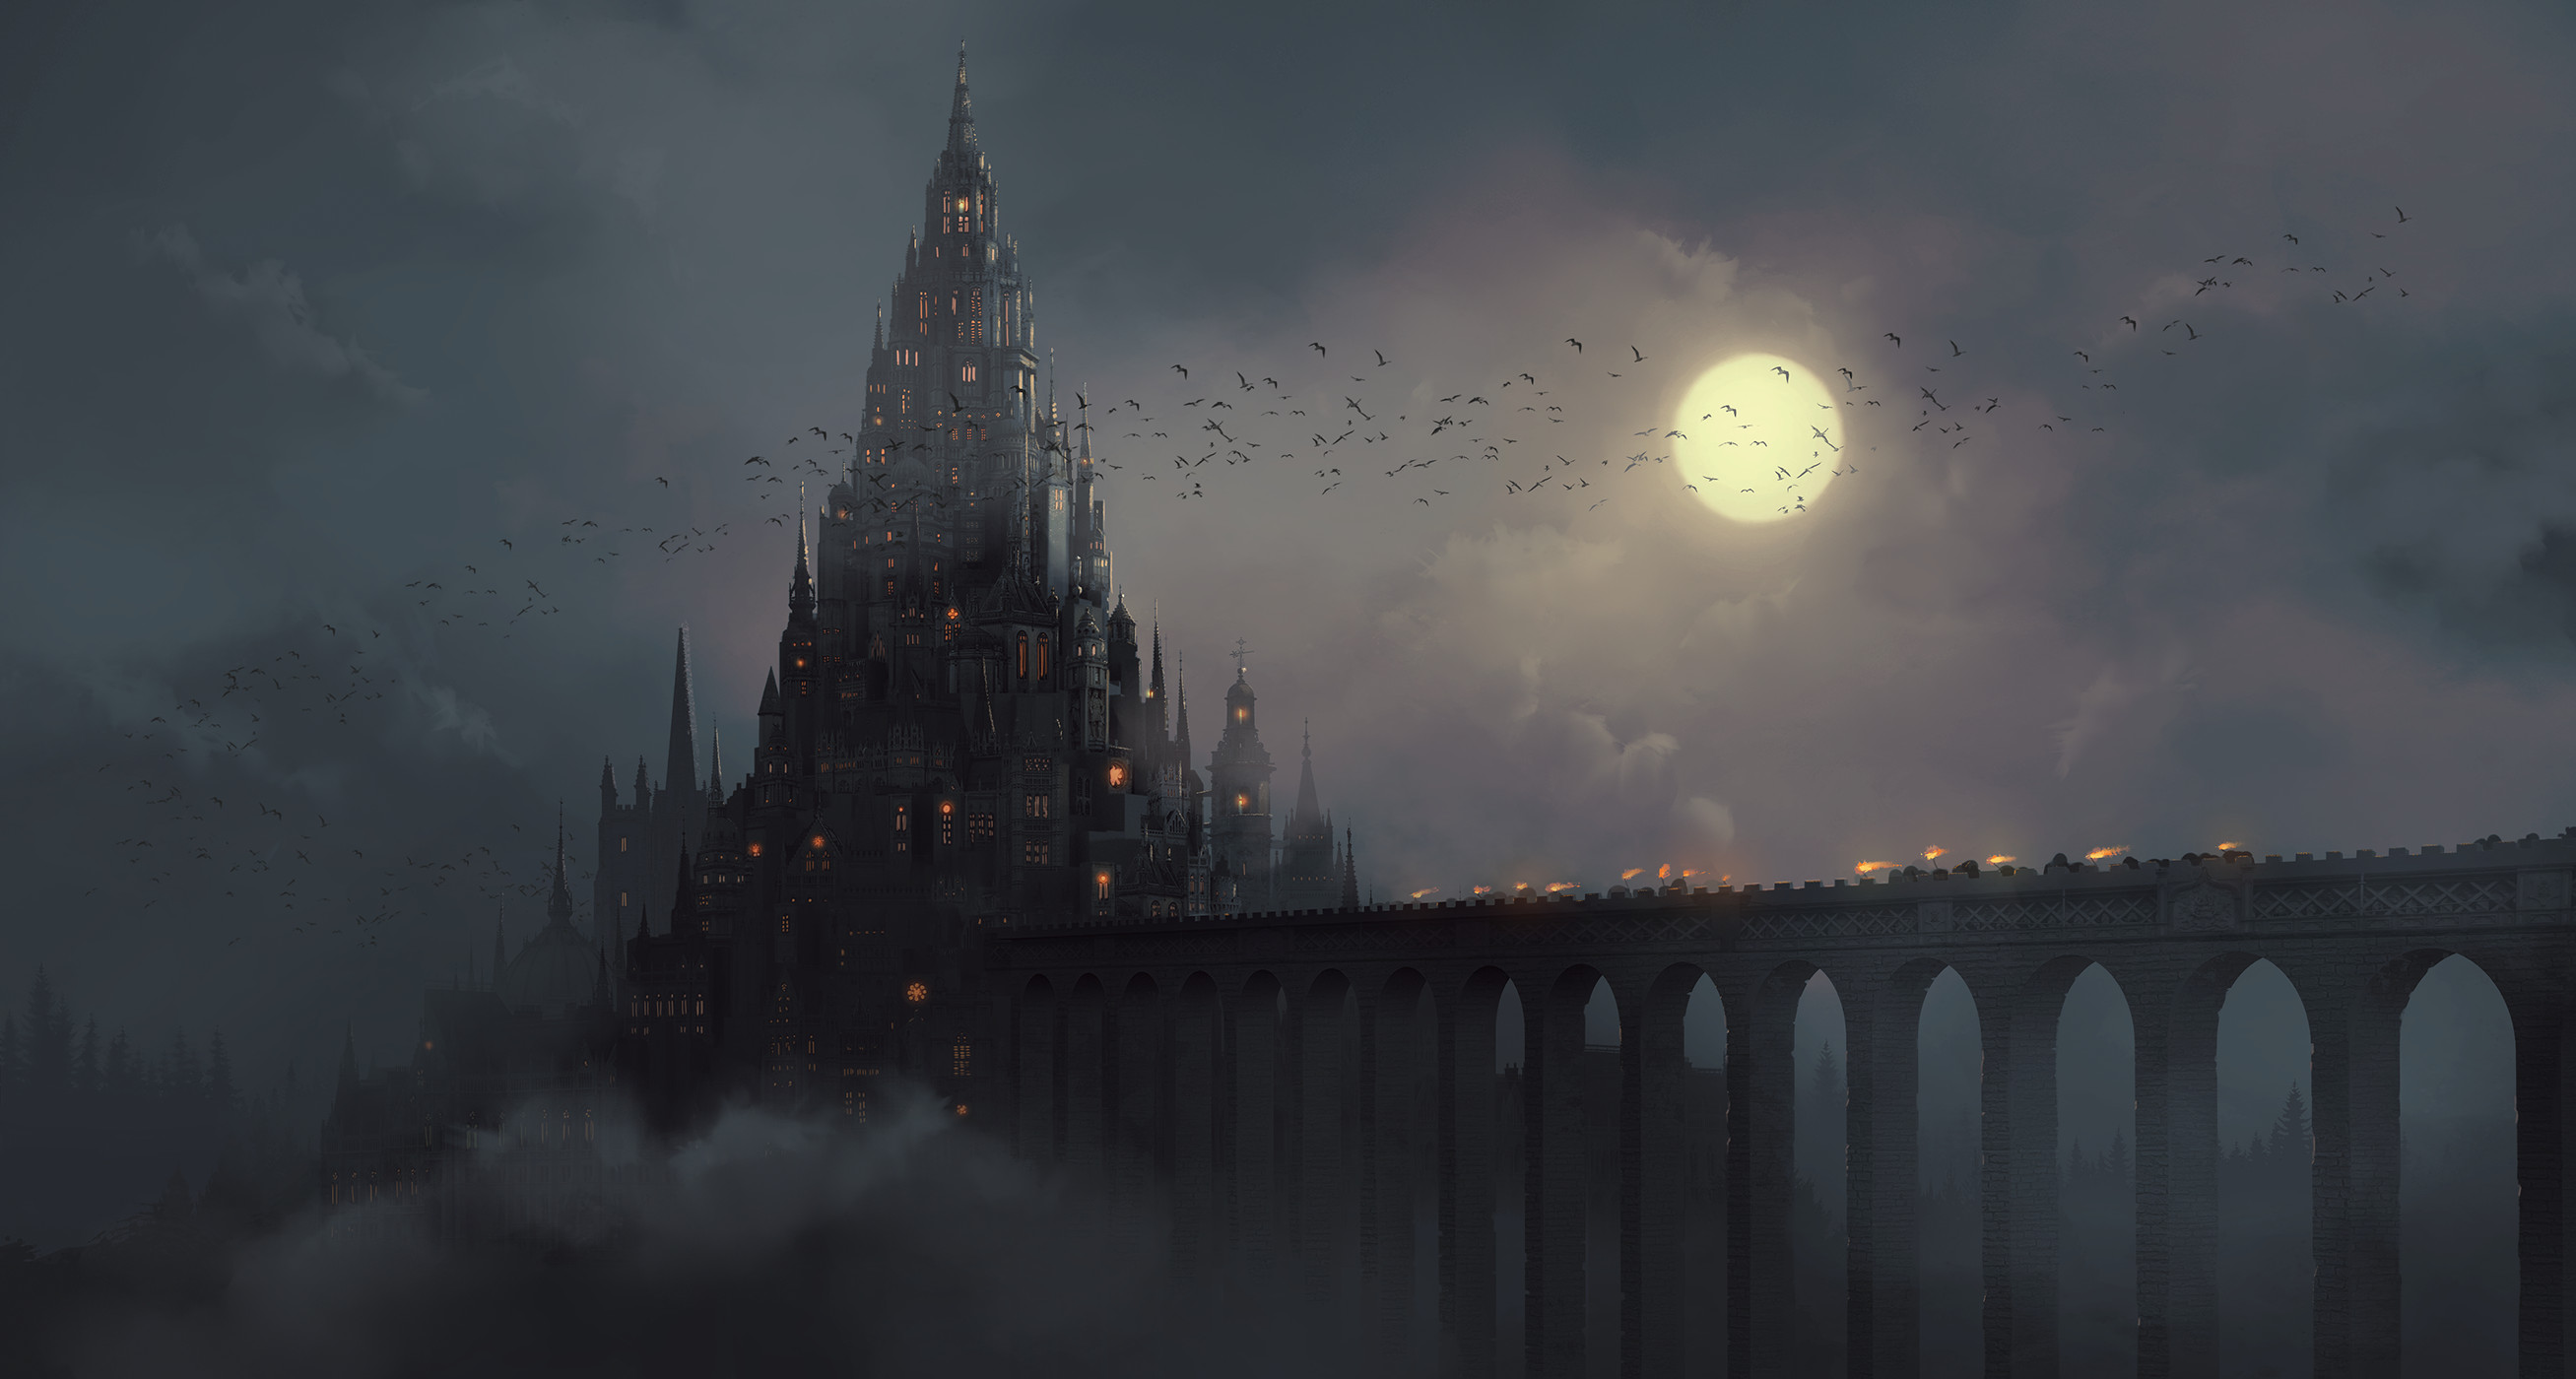 Jeff Miller Clouds Moon Birds Flying Night Mist Smoke Castle Bats Bridge Digital Art Artwork Lights  2615x1400